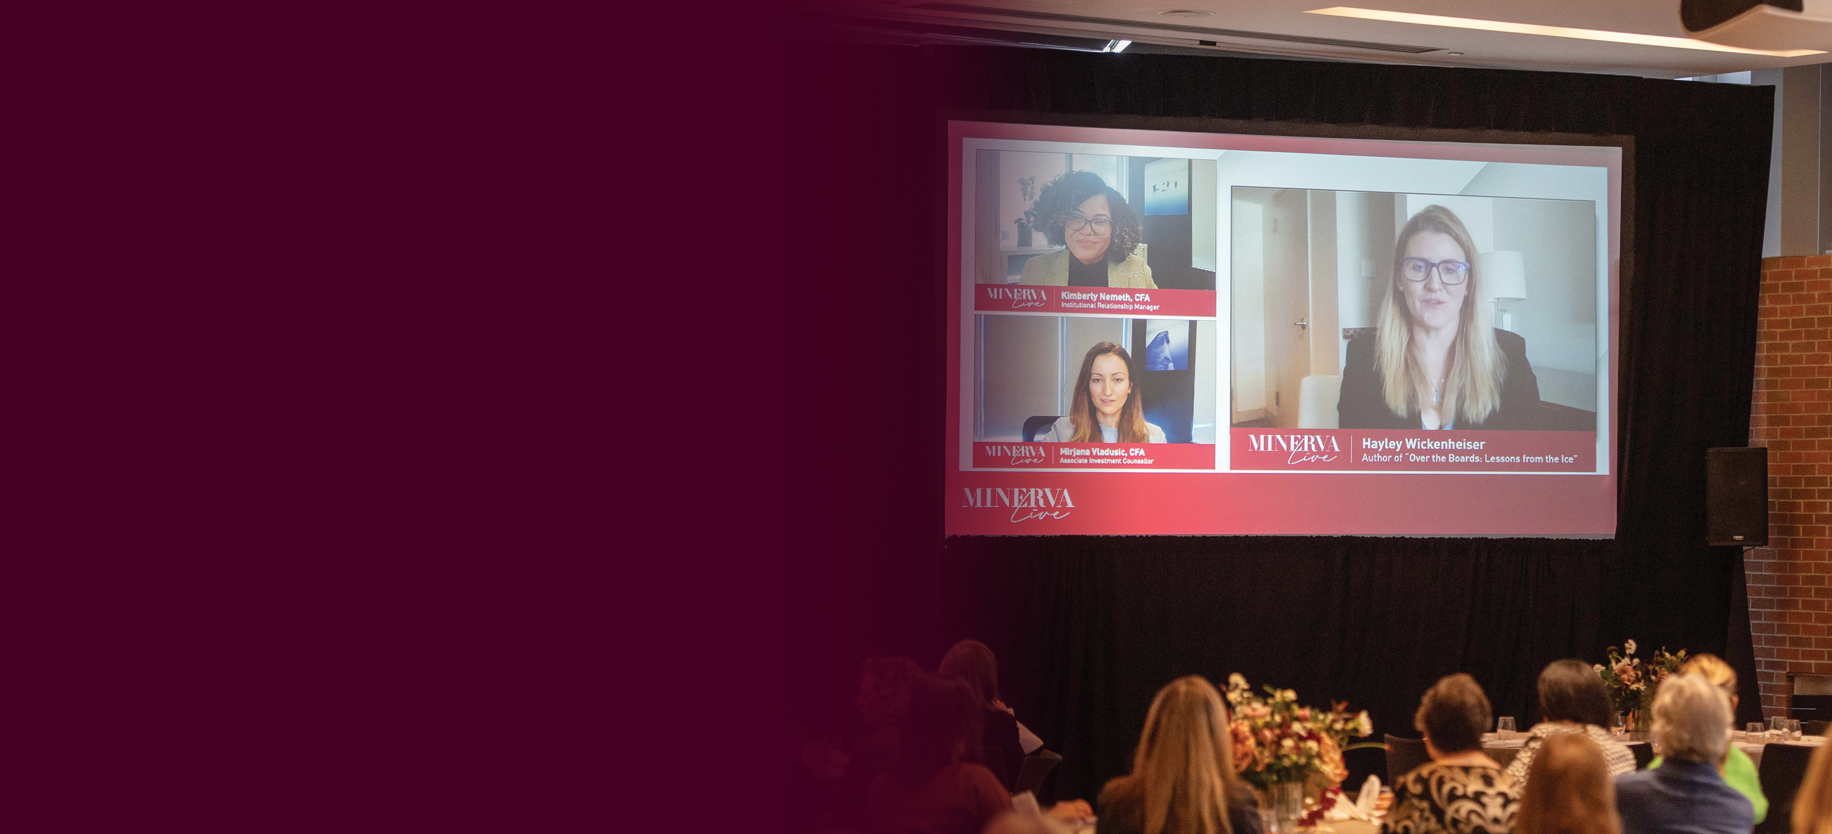 Image of Kimberly Nemeth, Mirjana Vladusic and Hayley Wickenheiser presenting virtually on a large screen